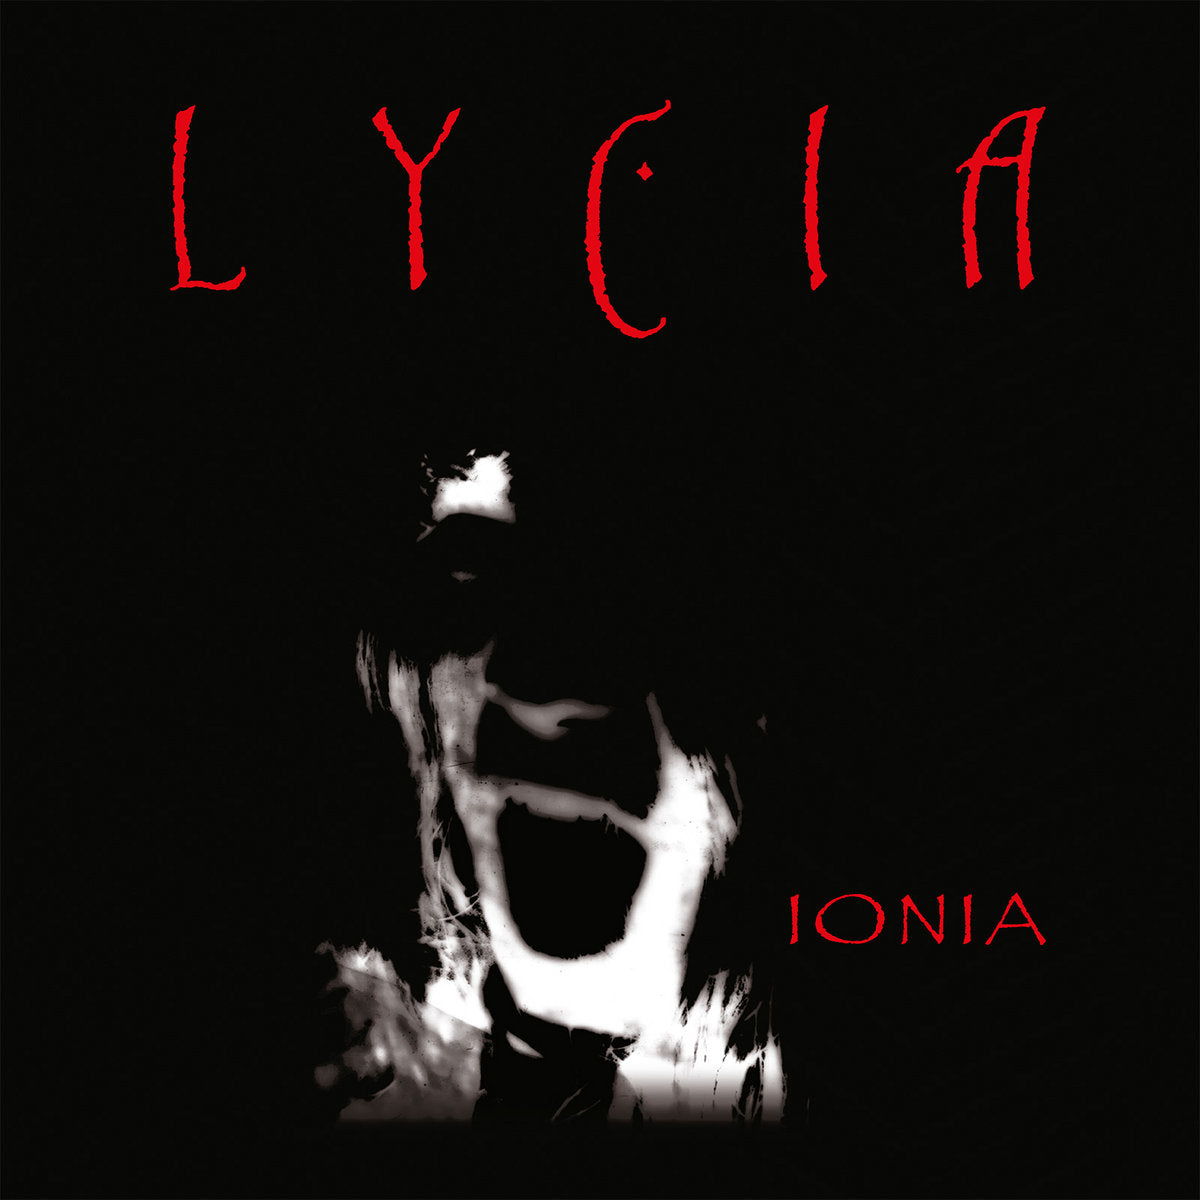 [SOLD OUT] LYCIA "Ionia" vinyl 2xLP (double LP gatefold, color - 1991 goth reissue, lim. 250)